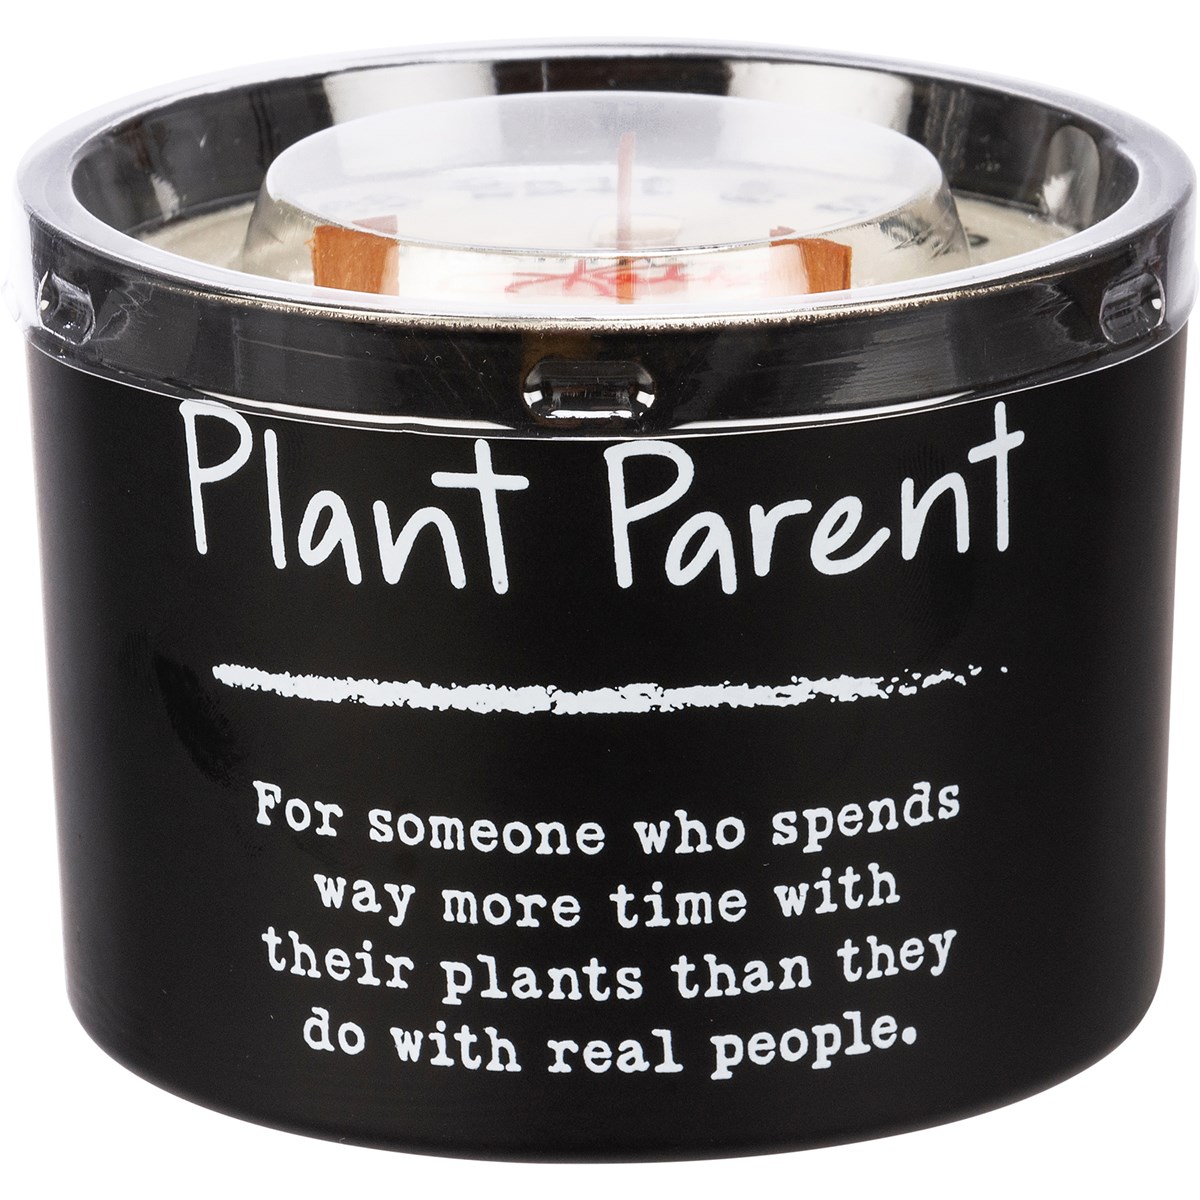 Plant Parent Jar Candle - Soy Wax, Glass, Wood